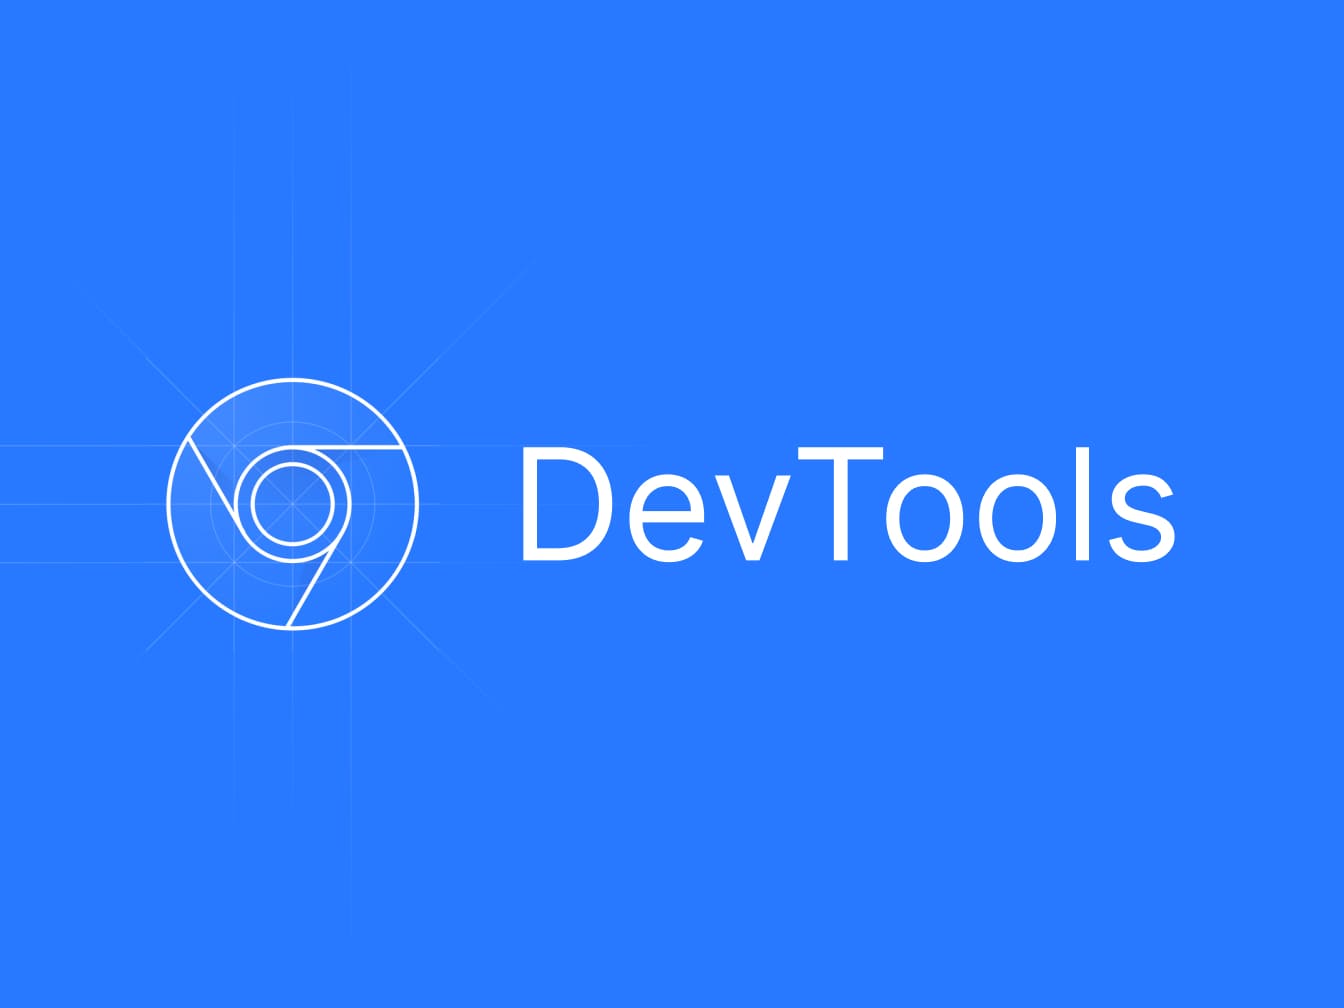 Google DevTools logo on a blue background